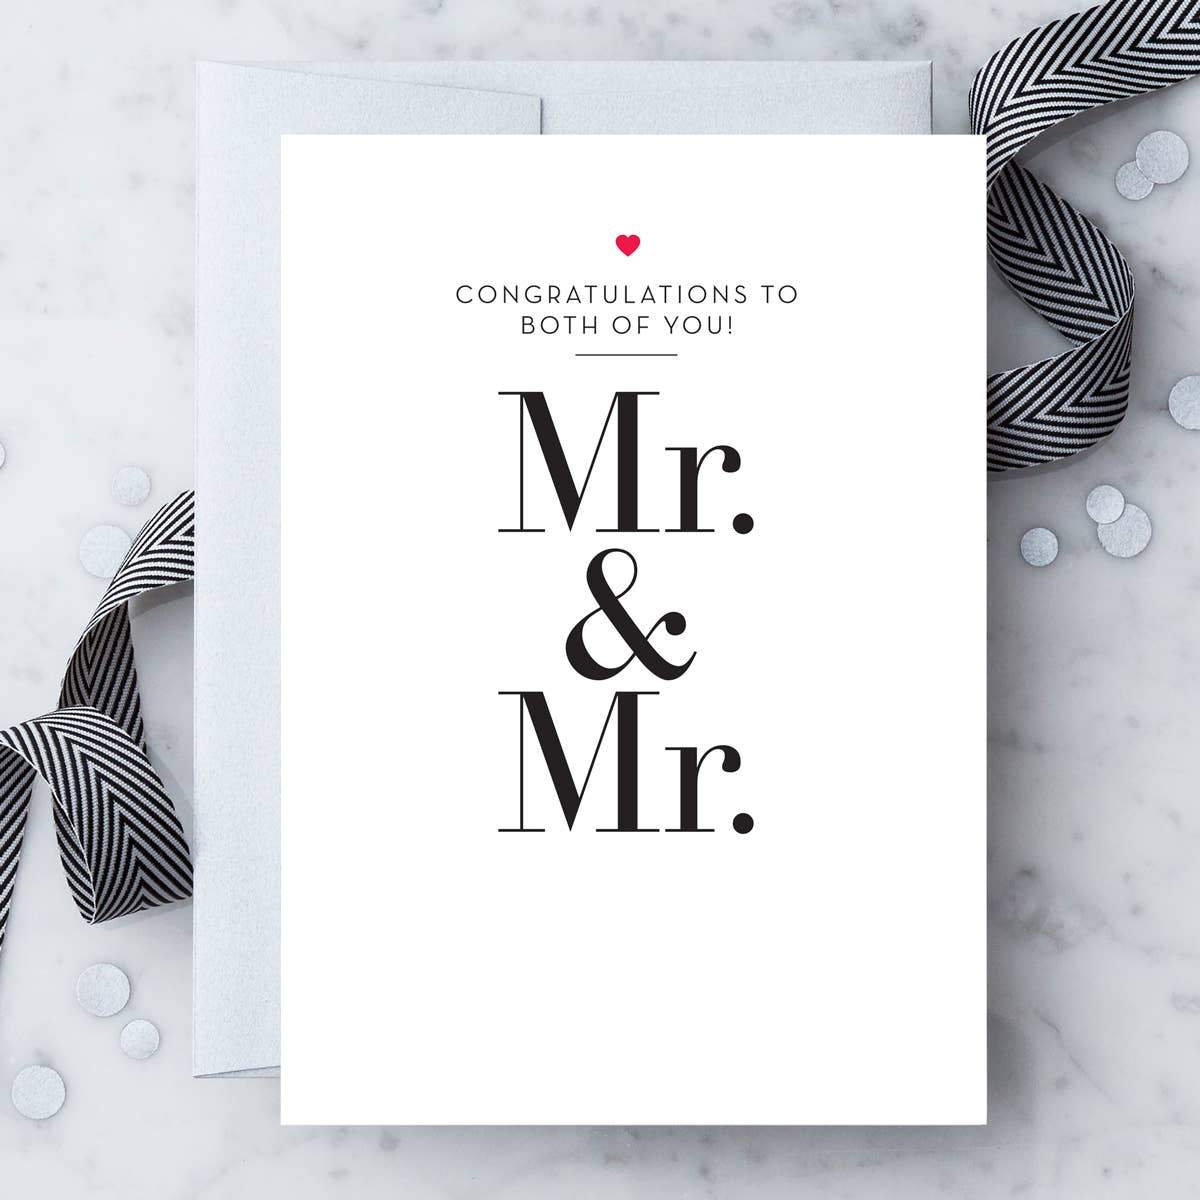 Mr. & Mr. Card - Congratulations!